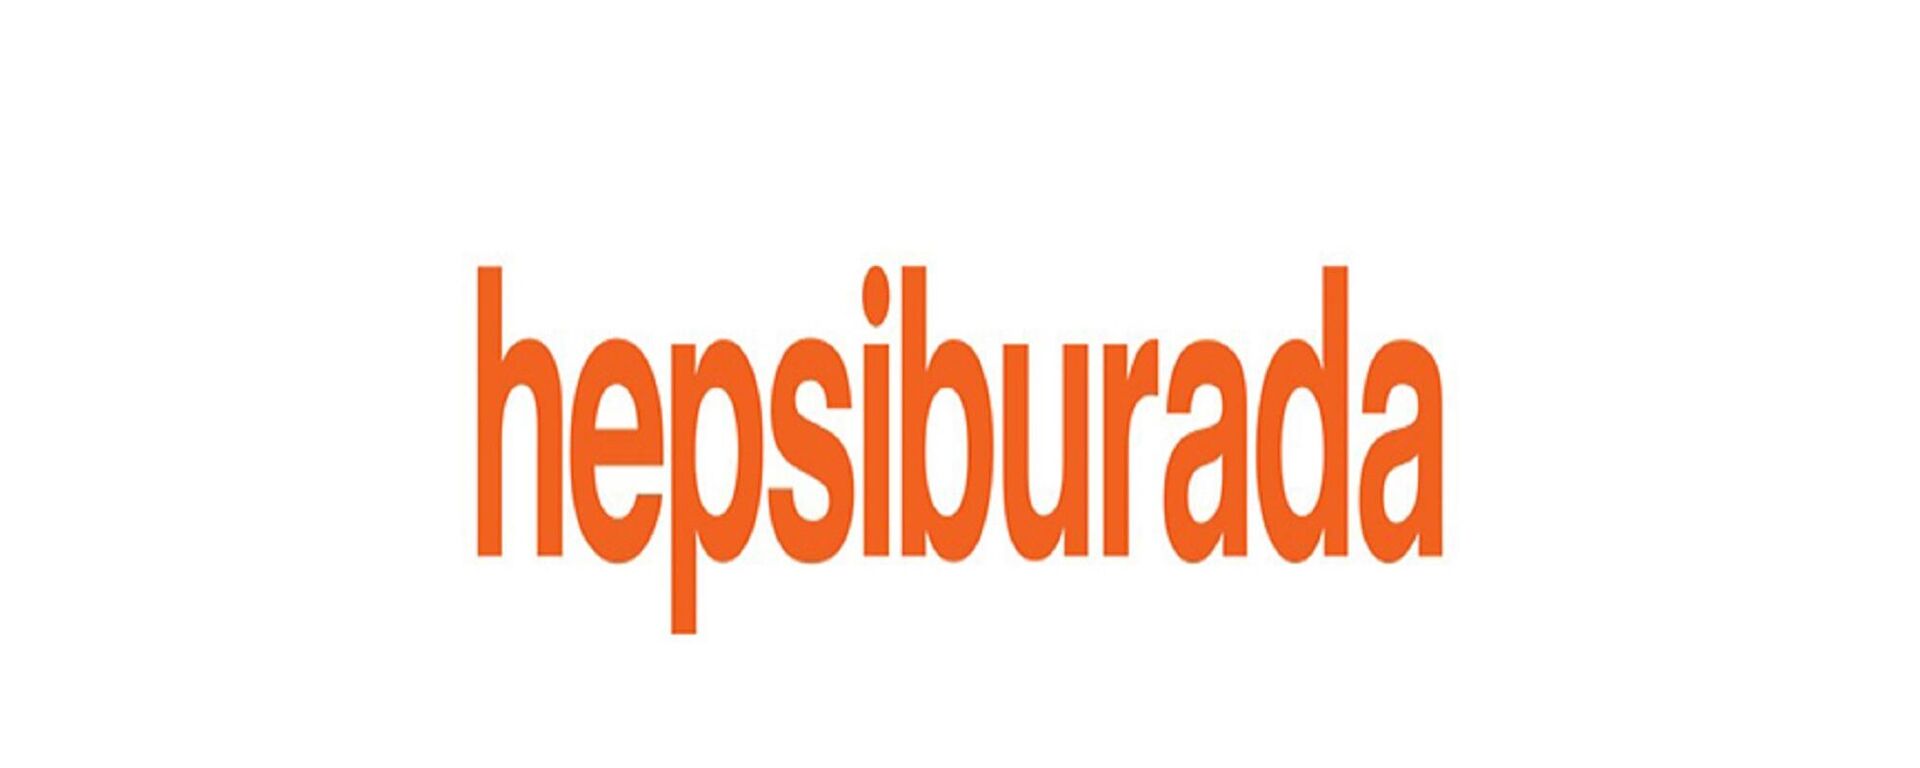 Hepsiburada - Sputnik Türkiye, 1920, 24.10.2022